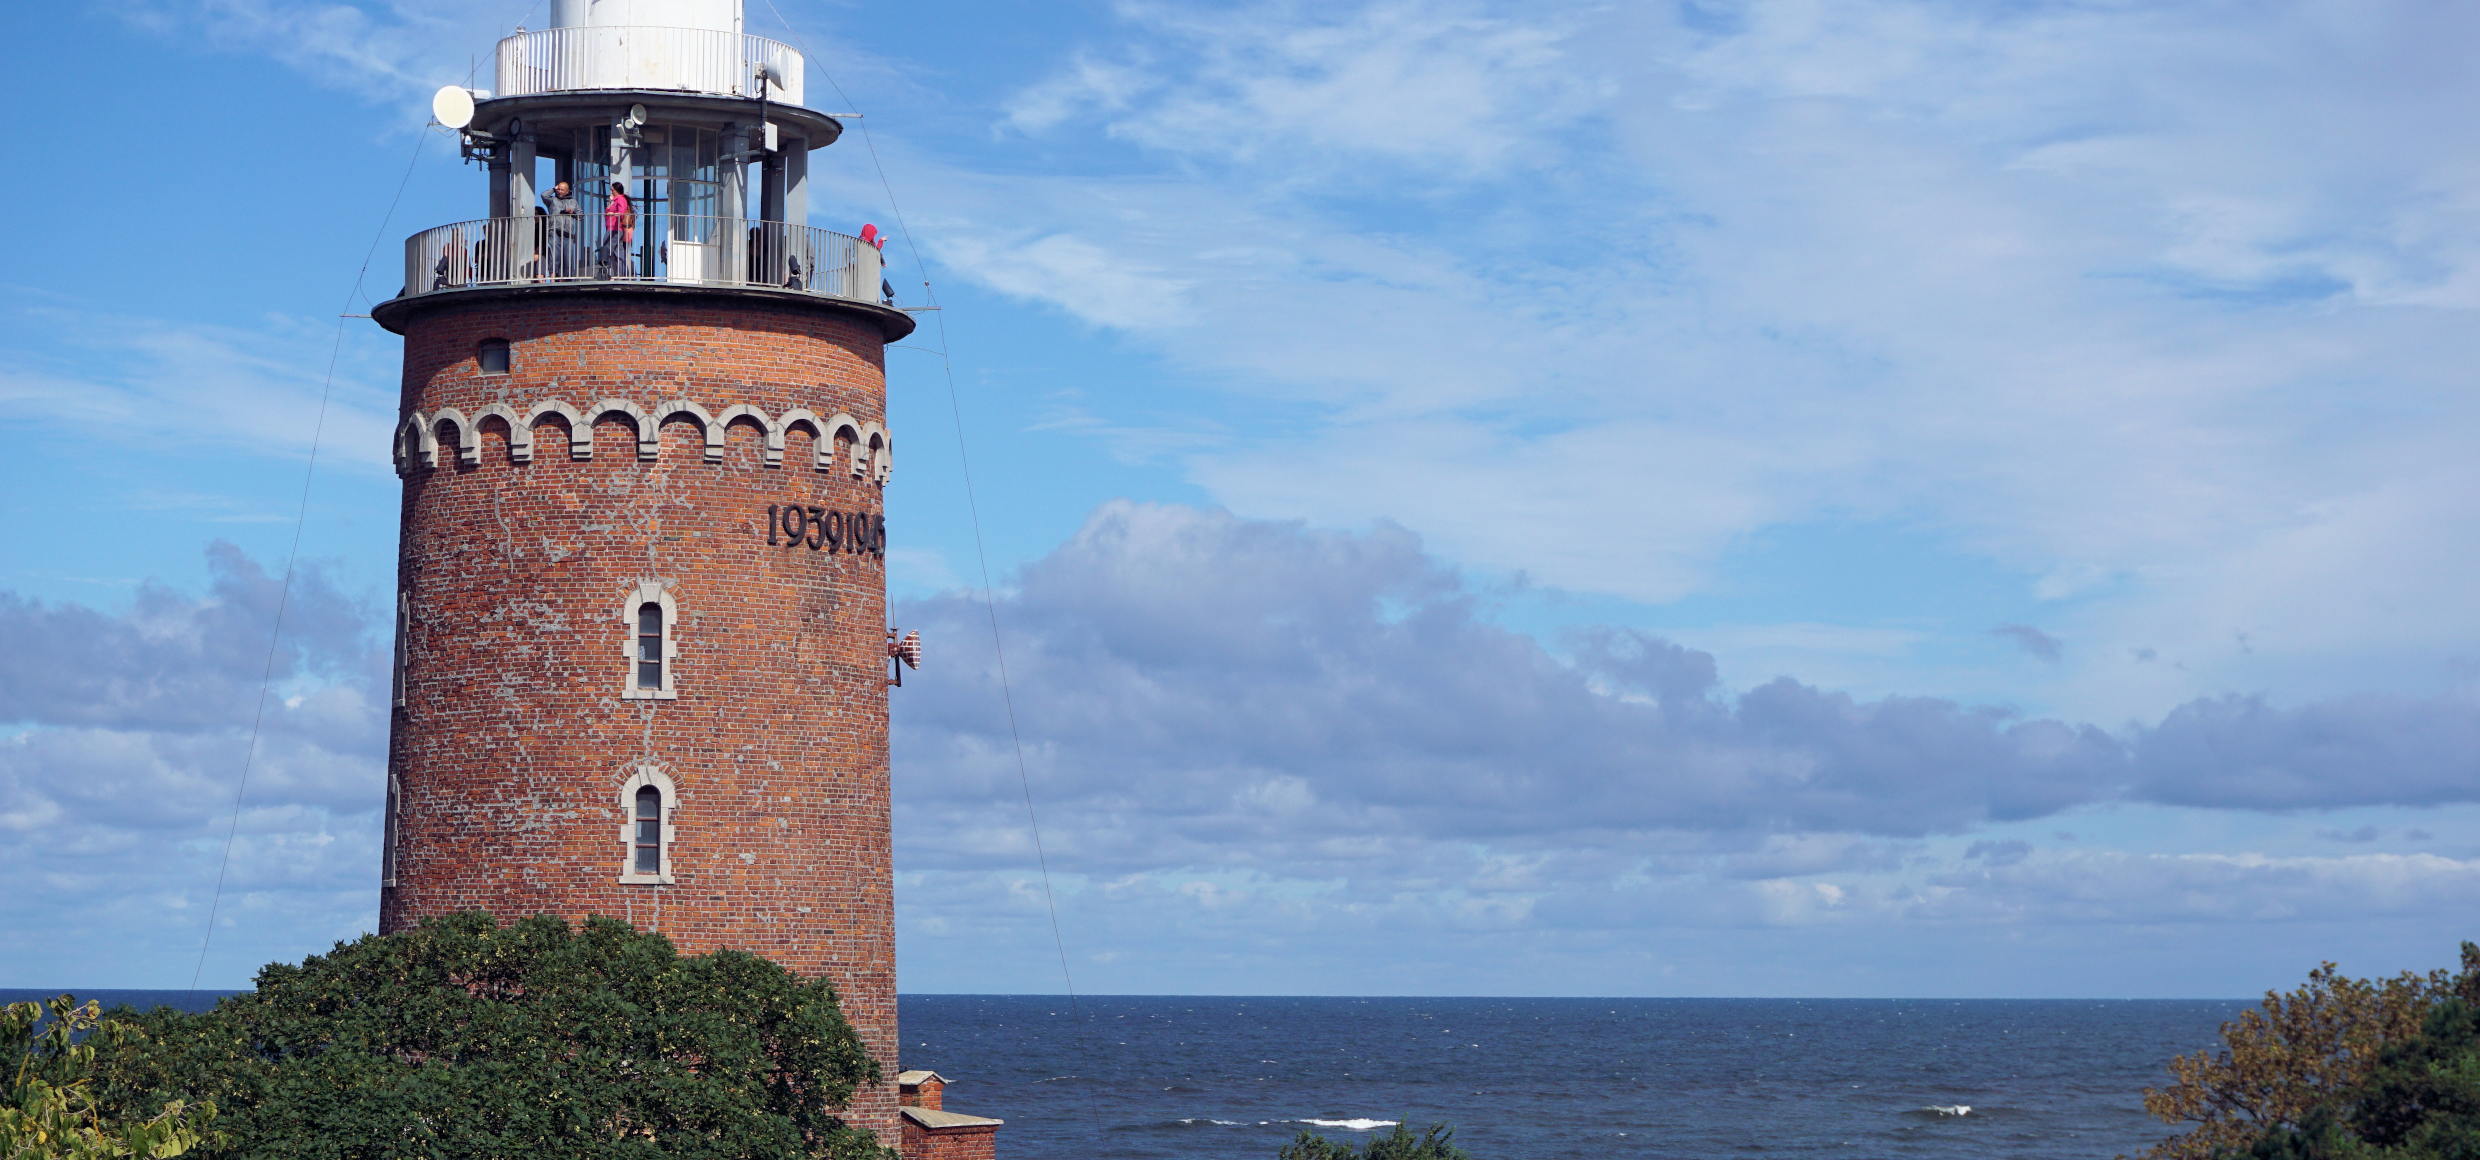 Slider3_202_03_Pommern_lighthouse-c-pixabay